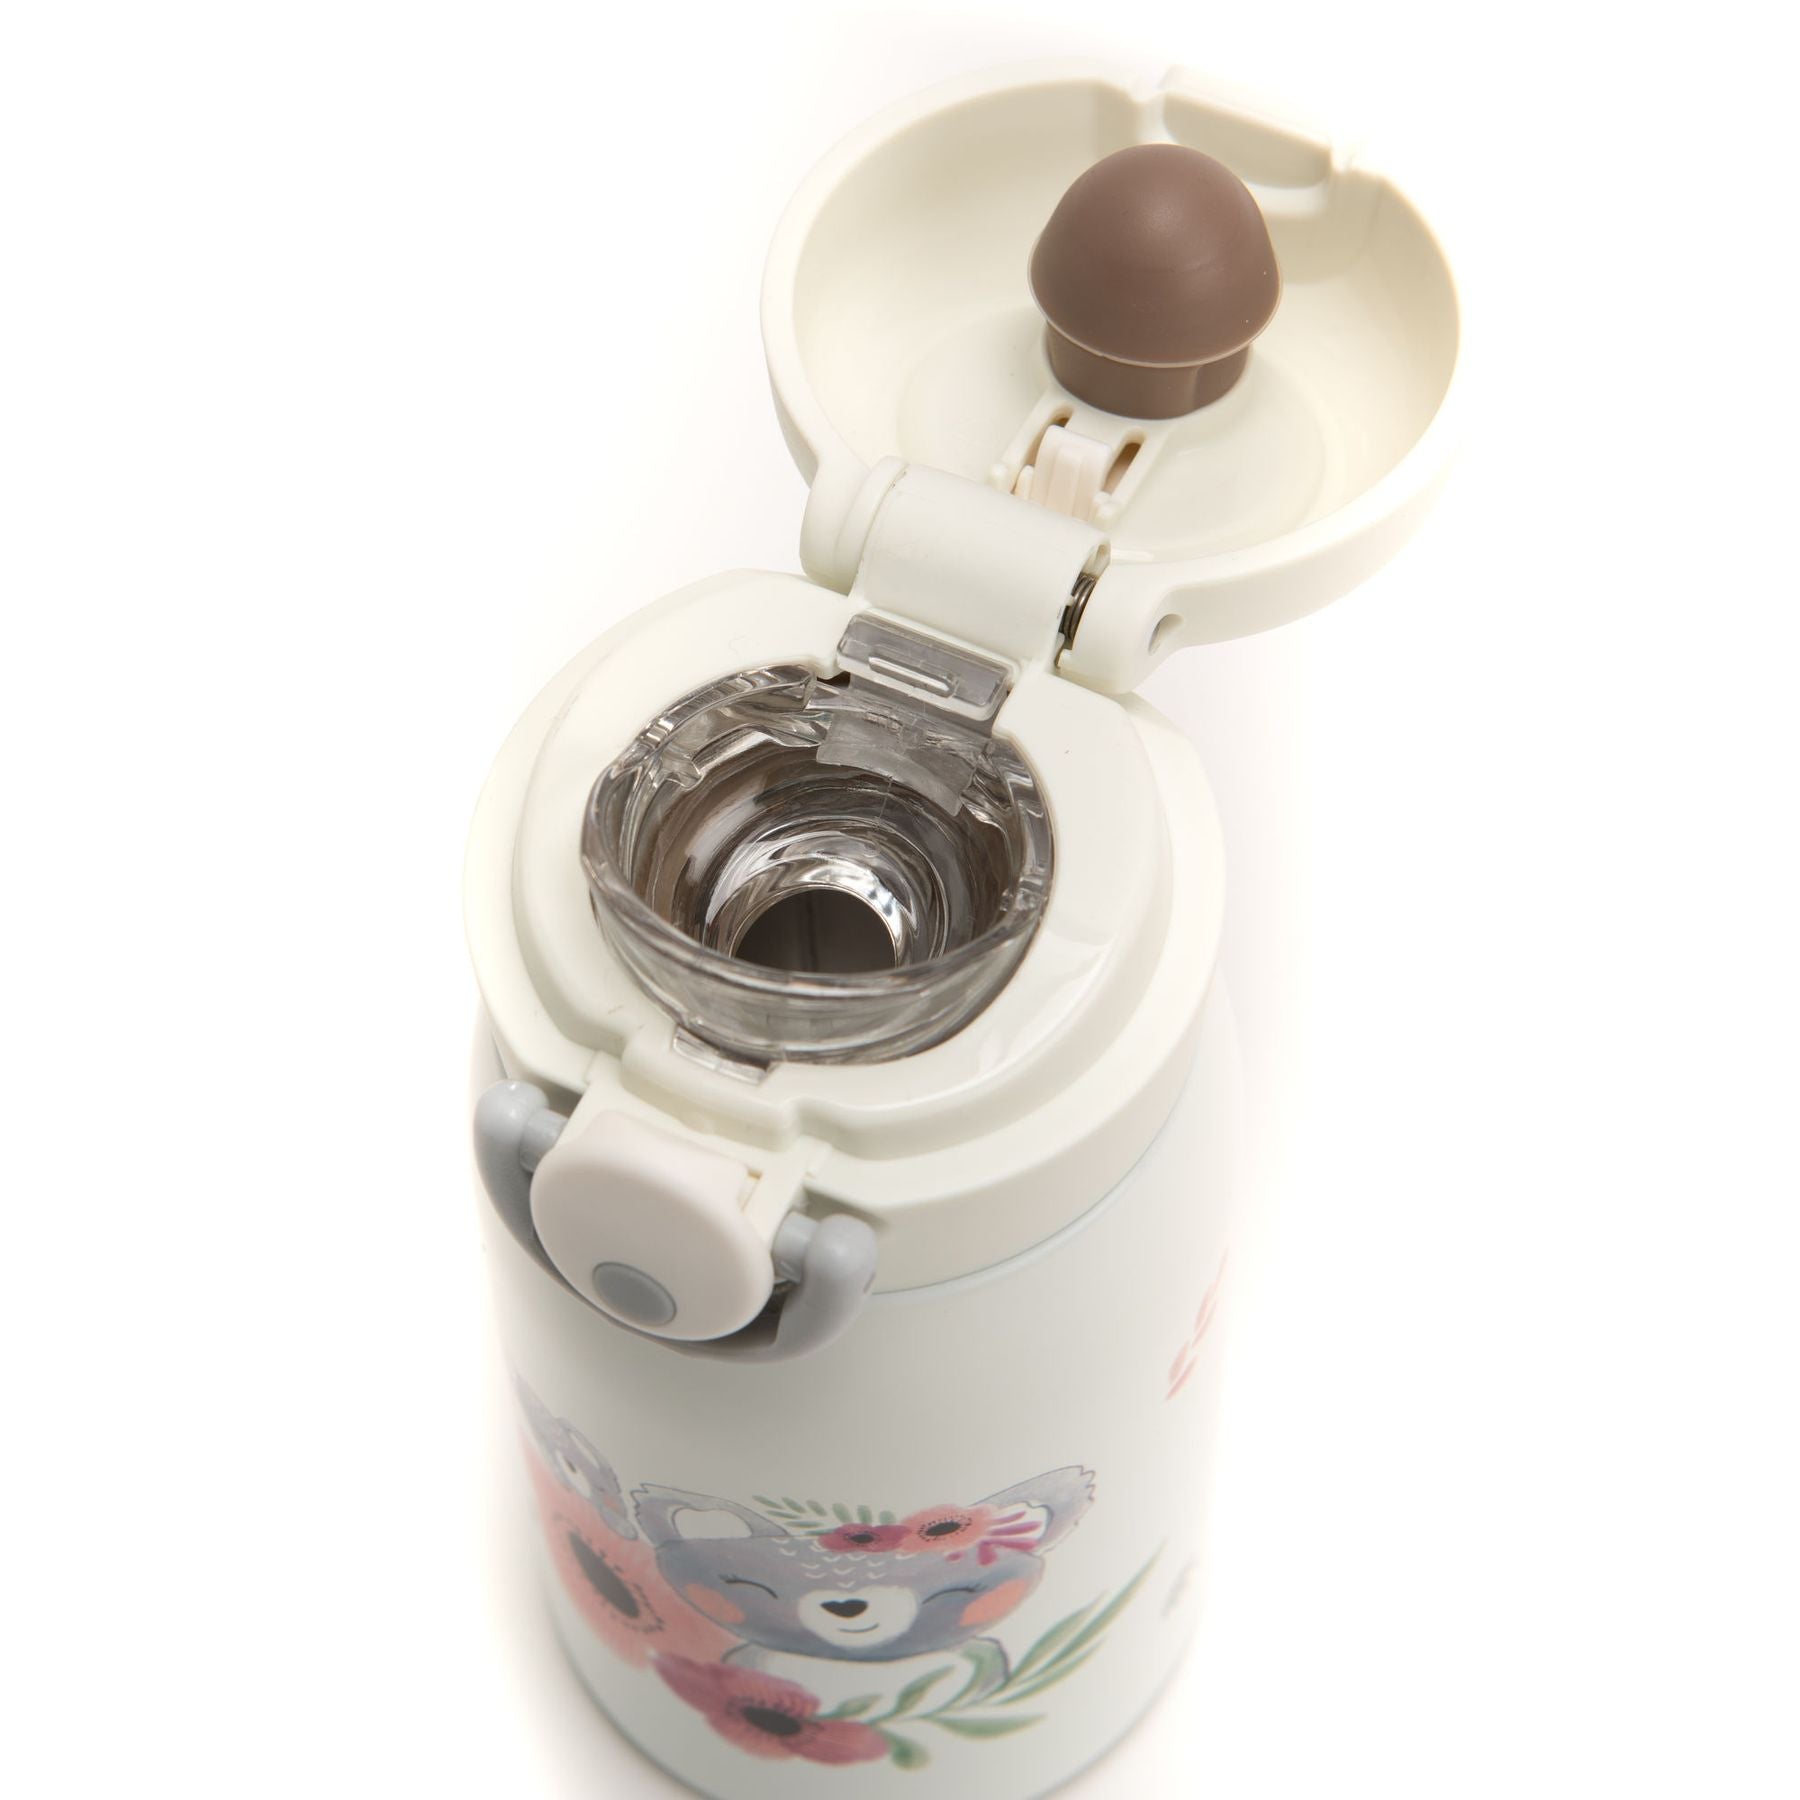 Koala thermal bottle - 158894